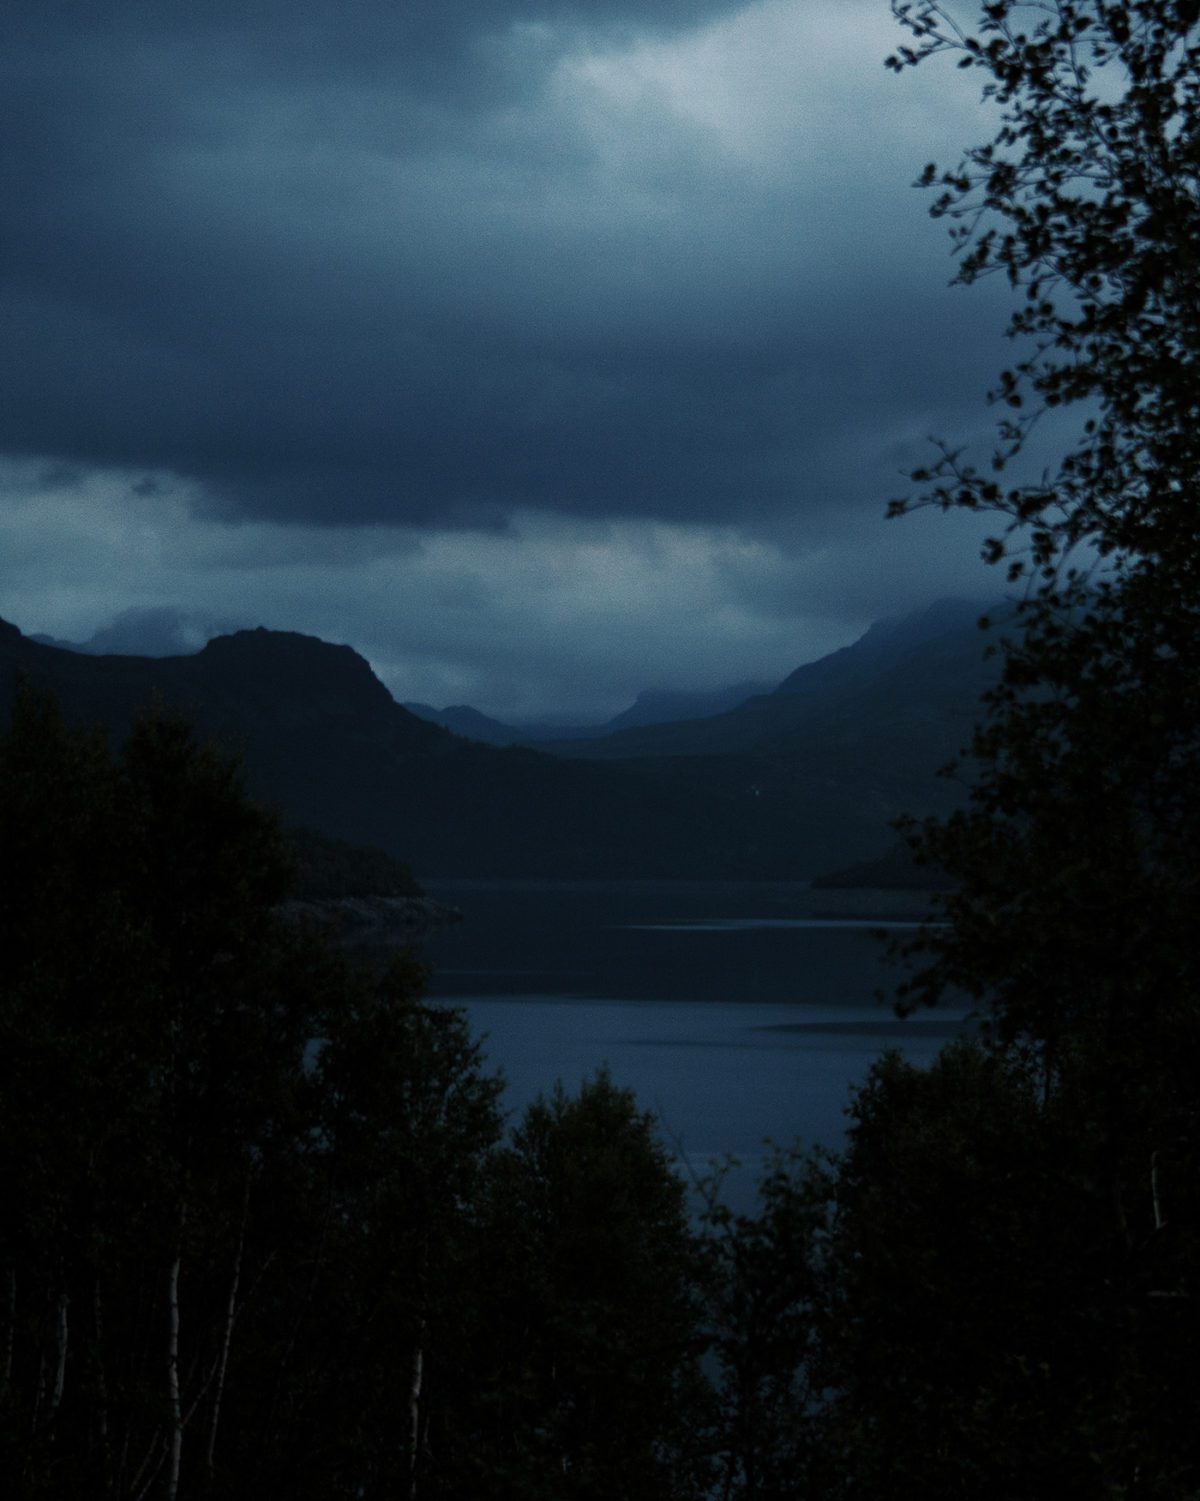 Røldal, Norway, at night